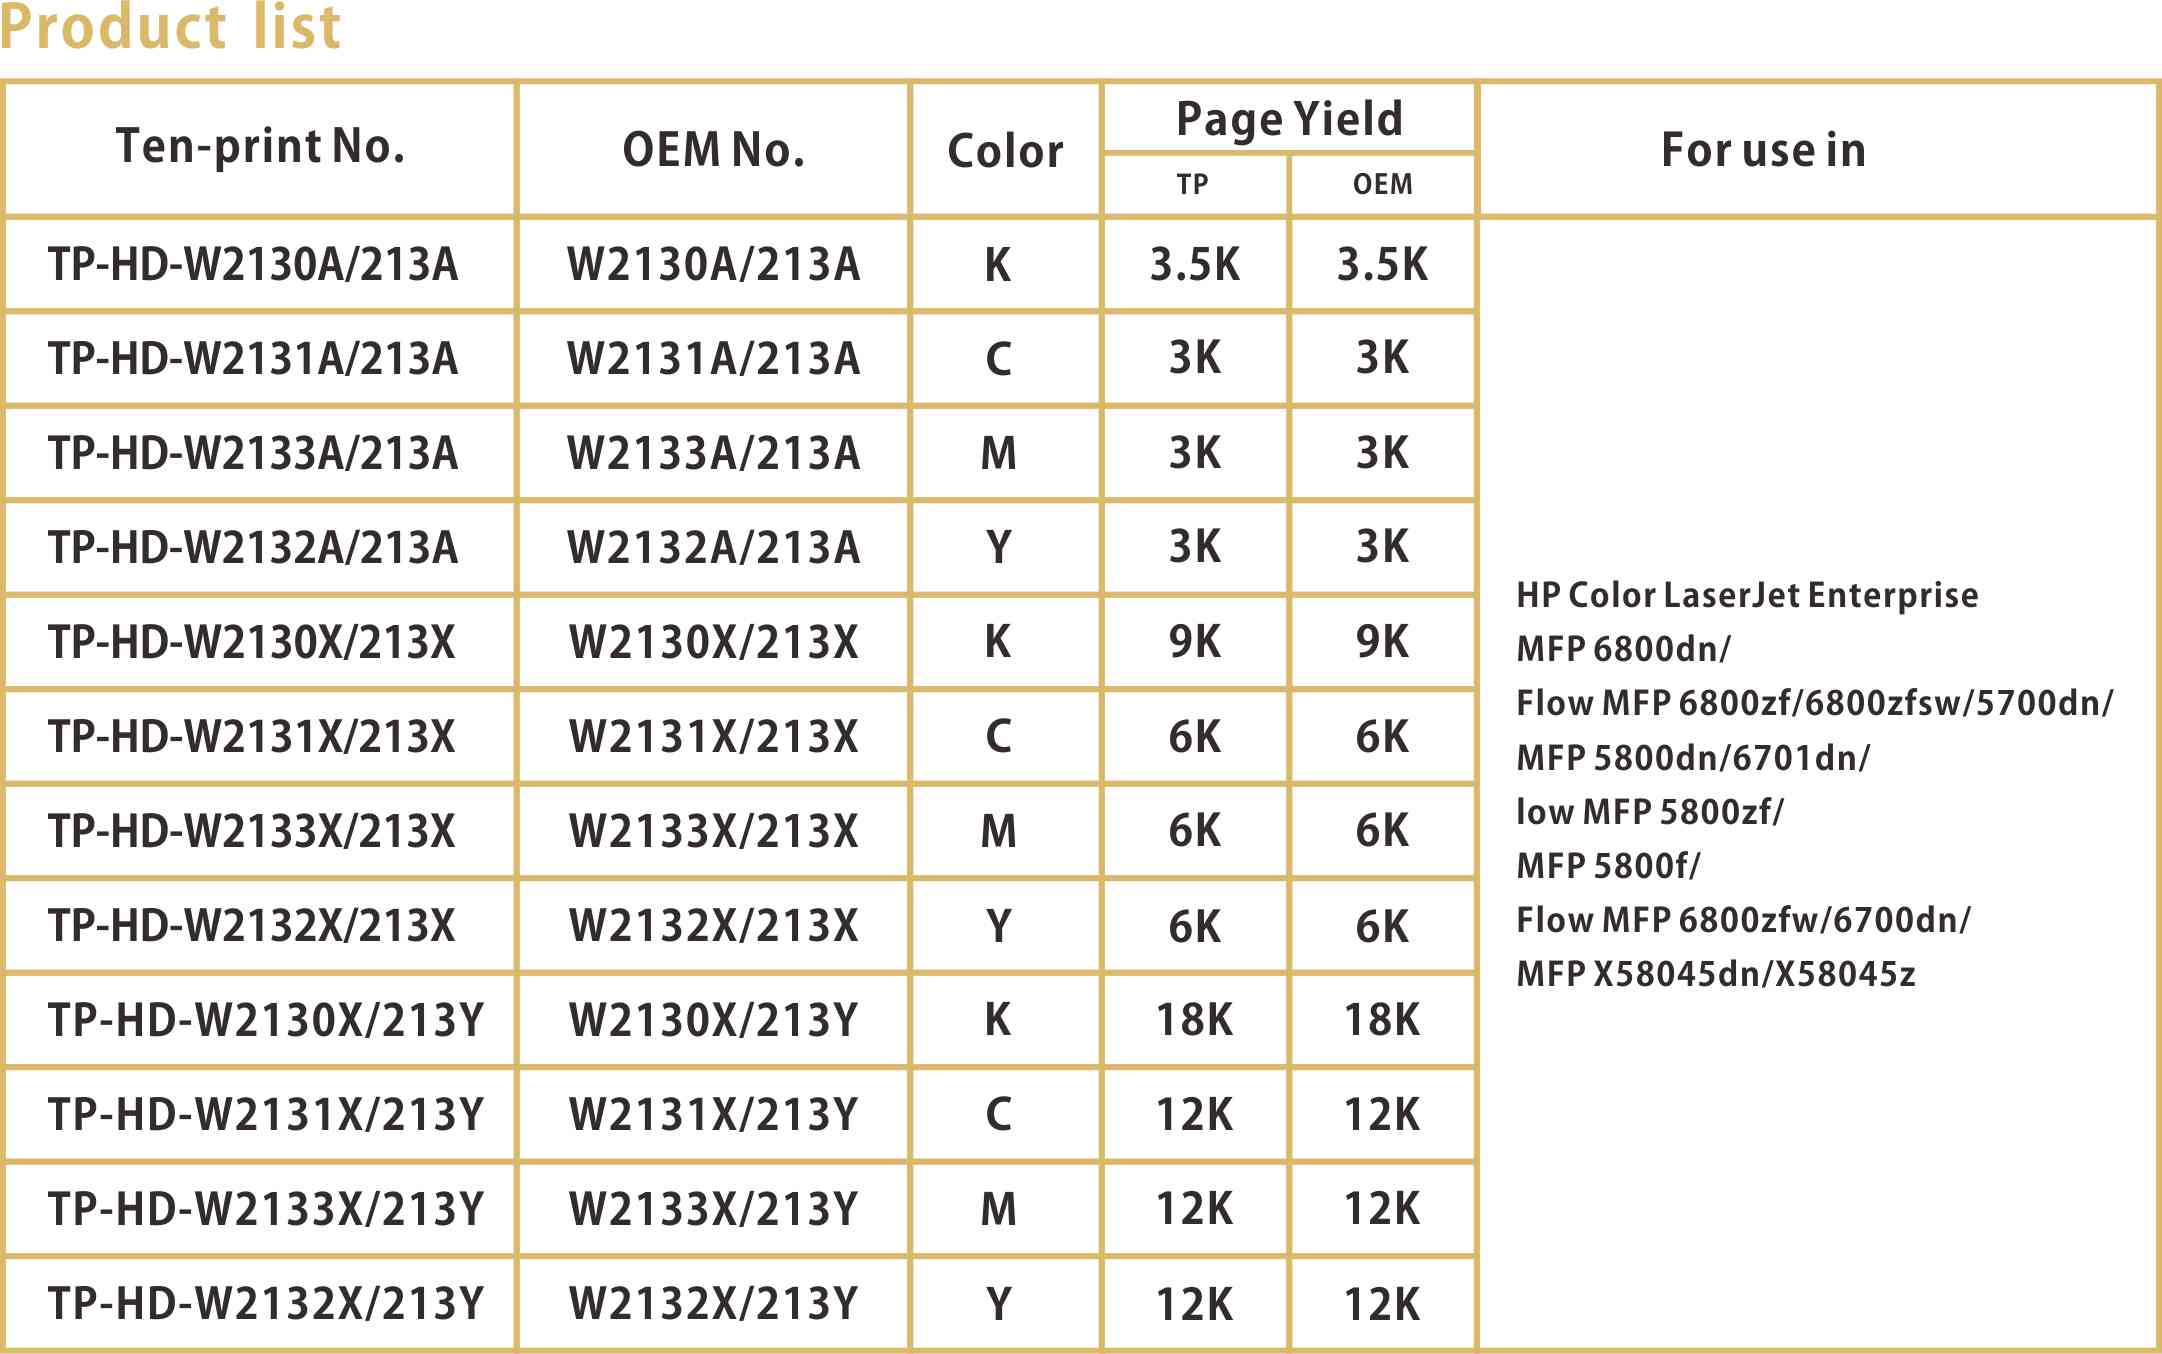 Ten-print Releases Cartridges For HP LaserJet Enterprise Series